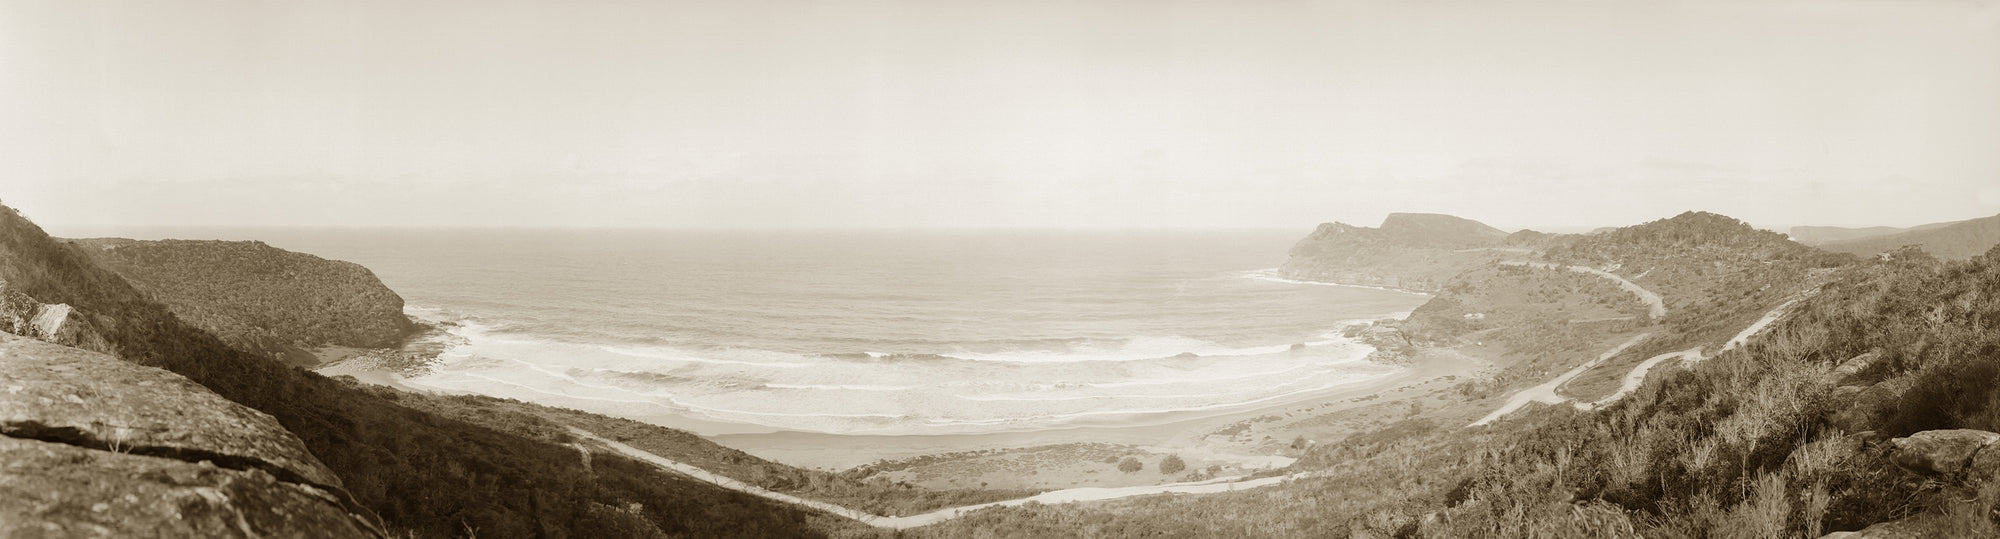 Overview, Whale Beach NSW Australia 1910s